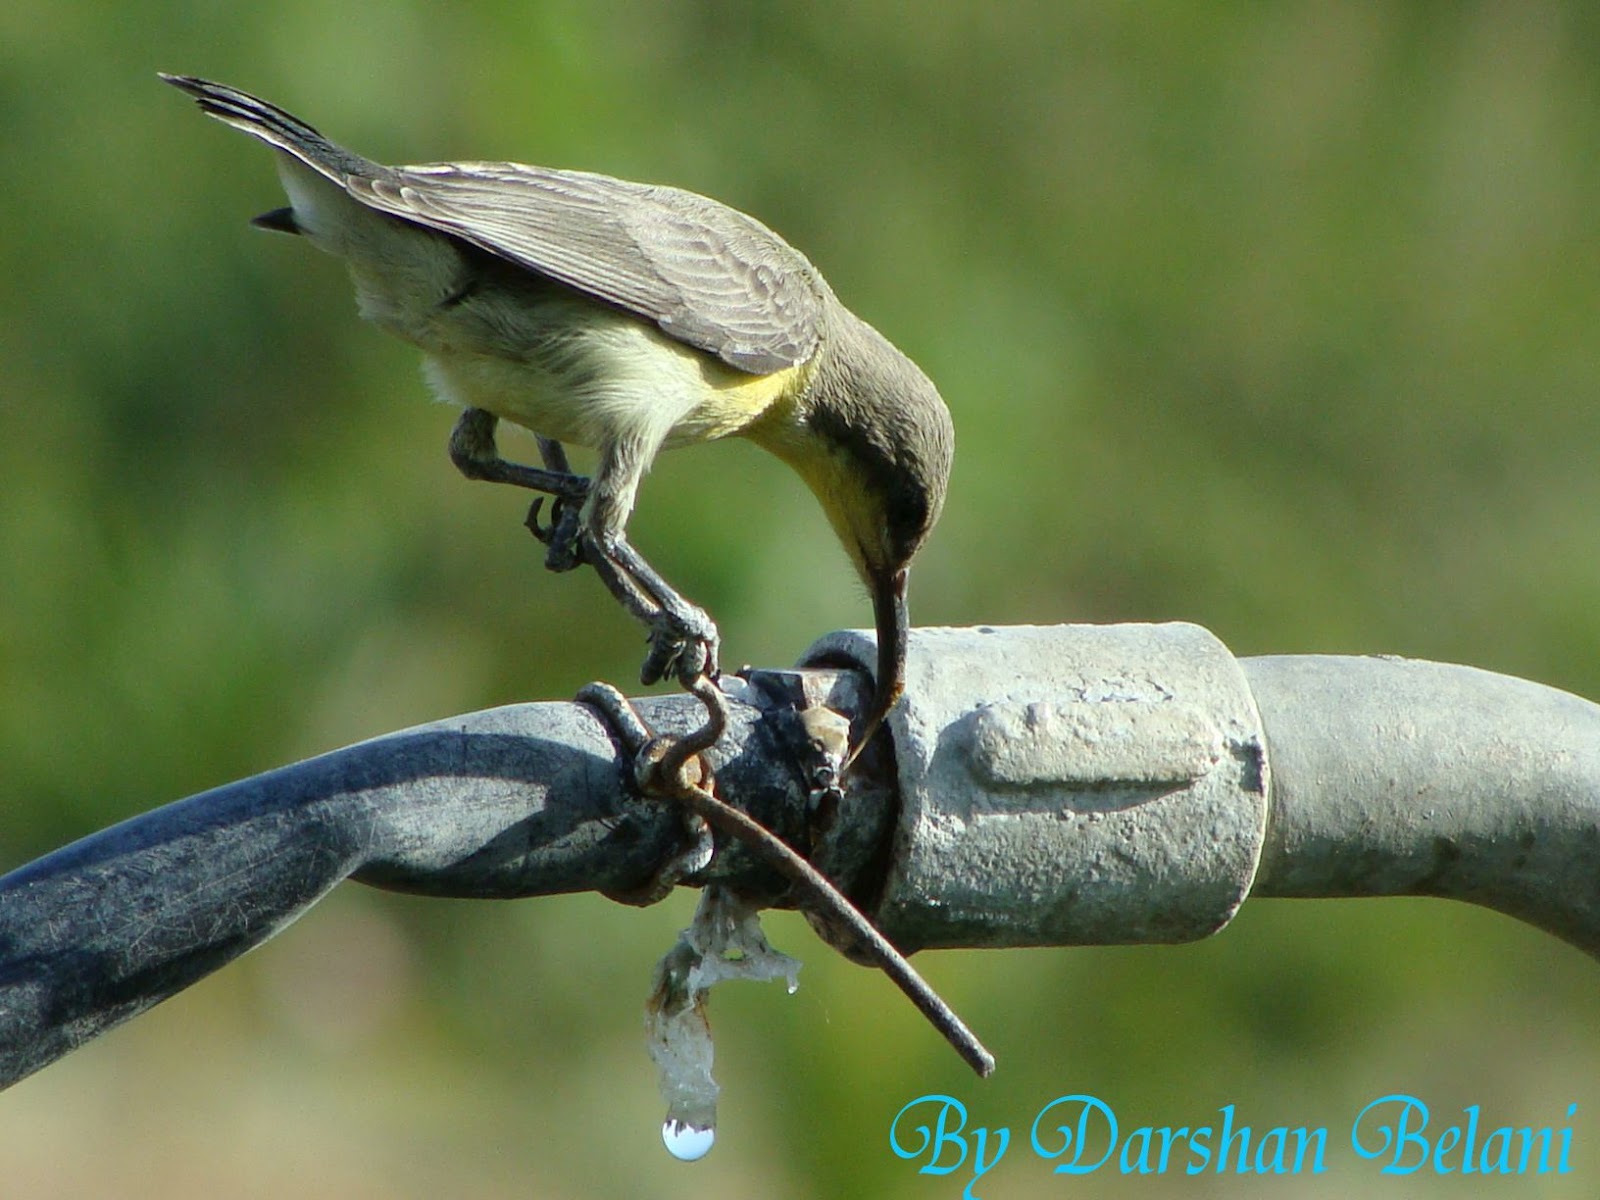 Darshan Belani's Photo Gallery: Sun Bird Drinking Water In Summer 2009